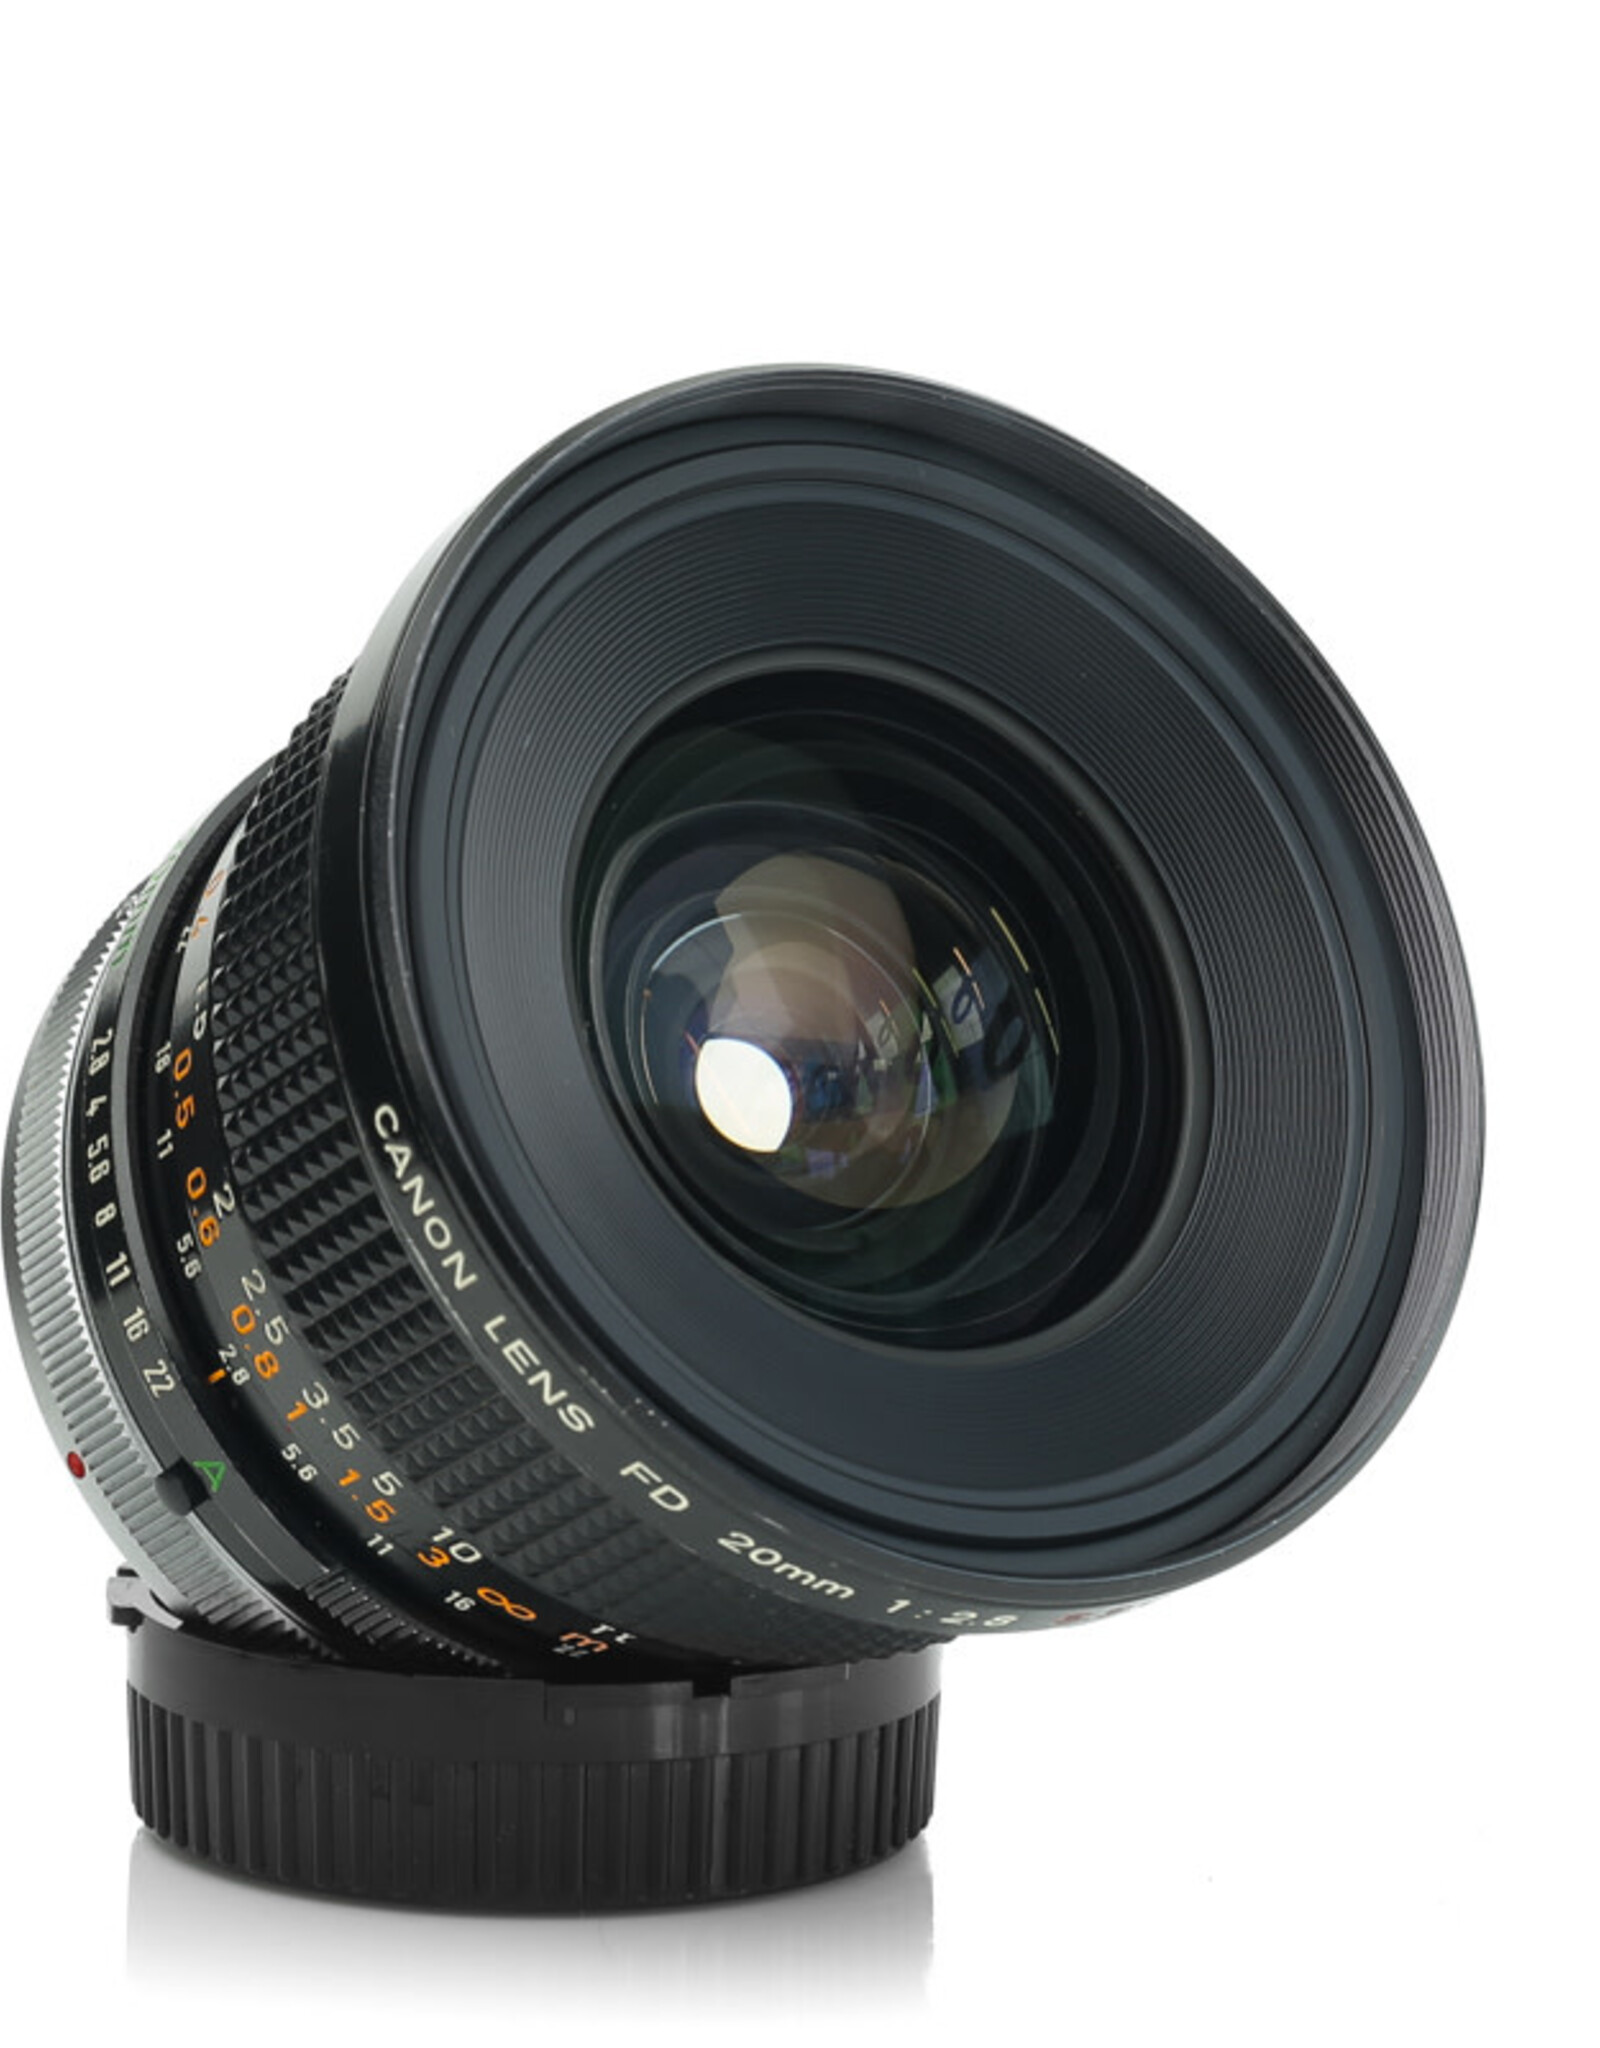 Canon Canon 20mm f2.8 FD S.S.C. Lens